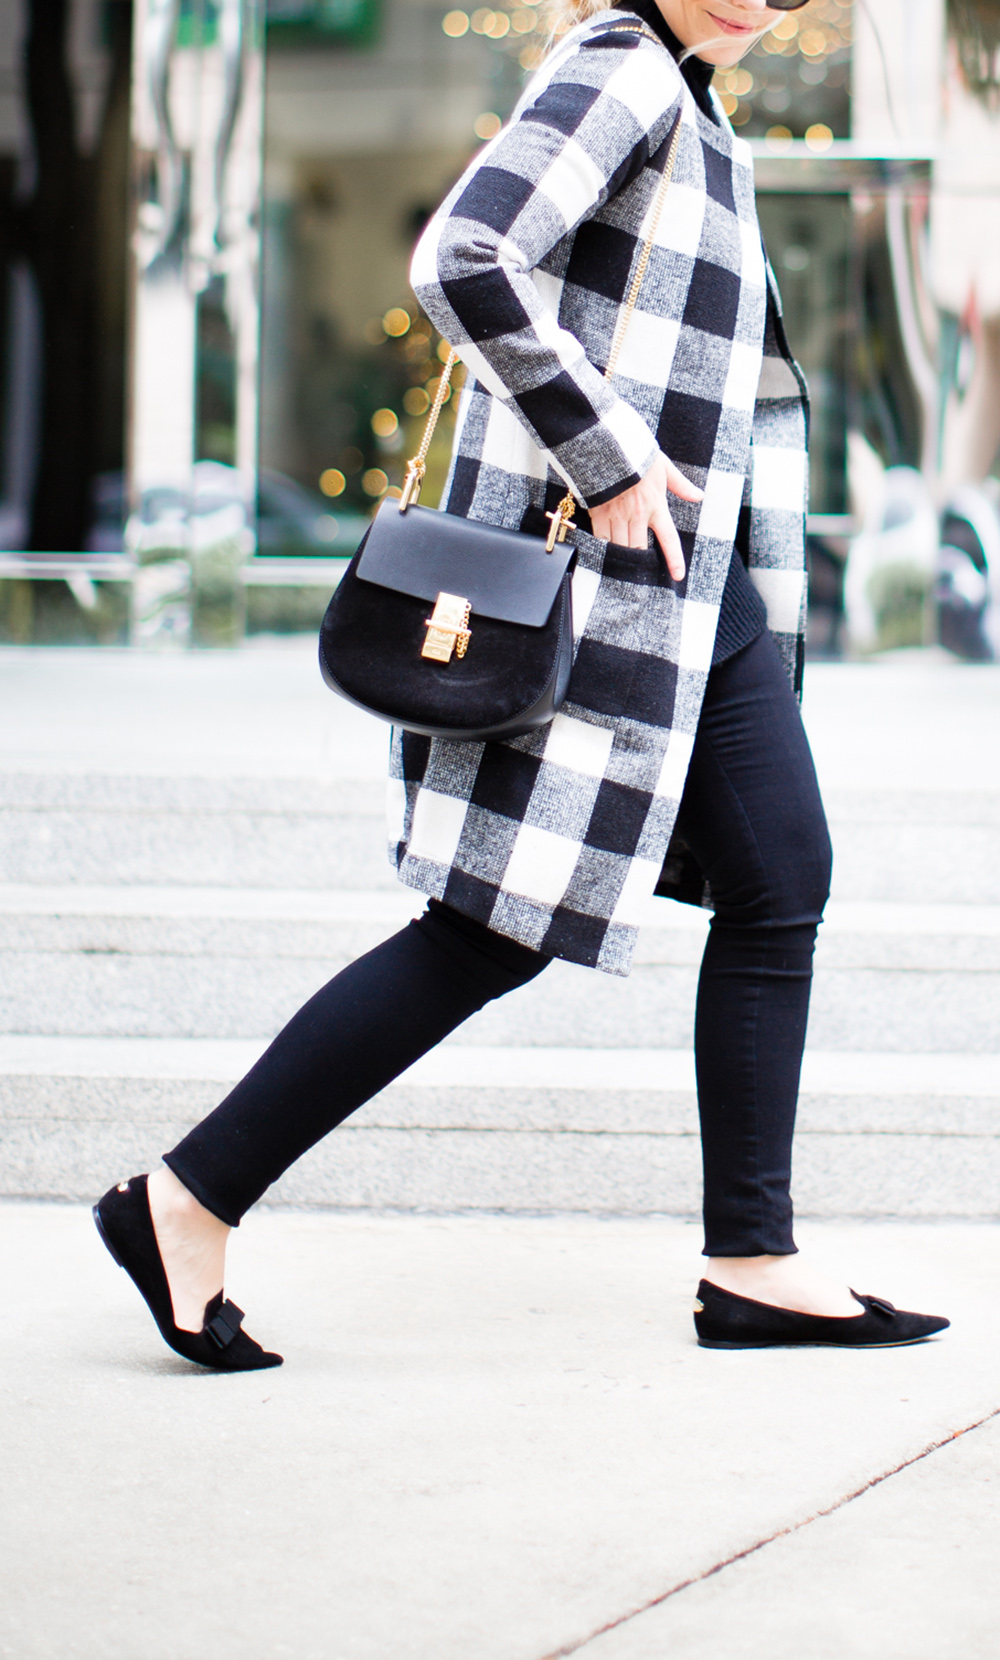 Black + White Checkered Jacket